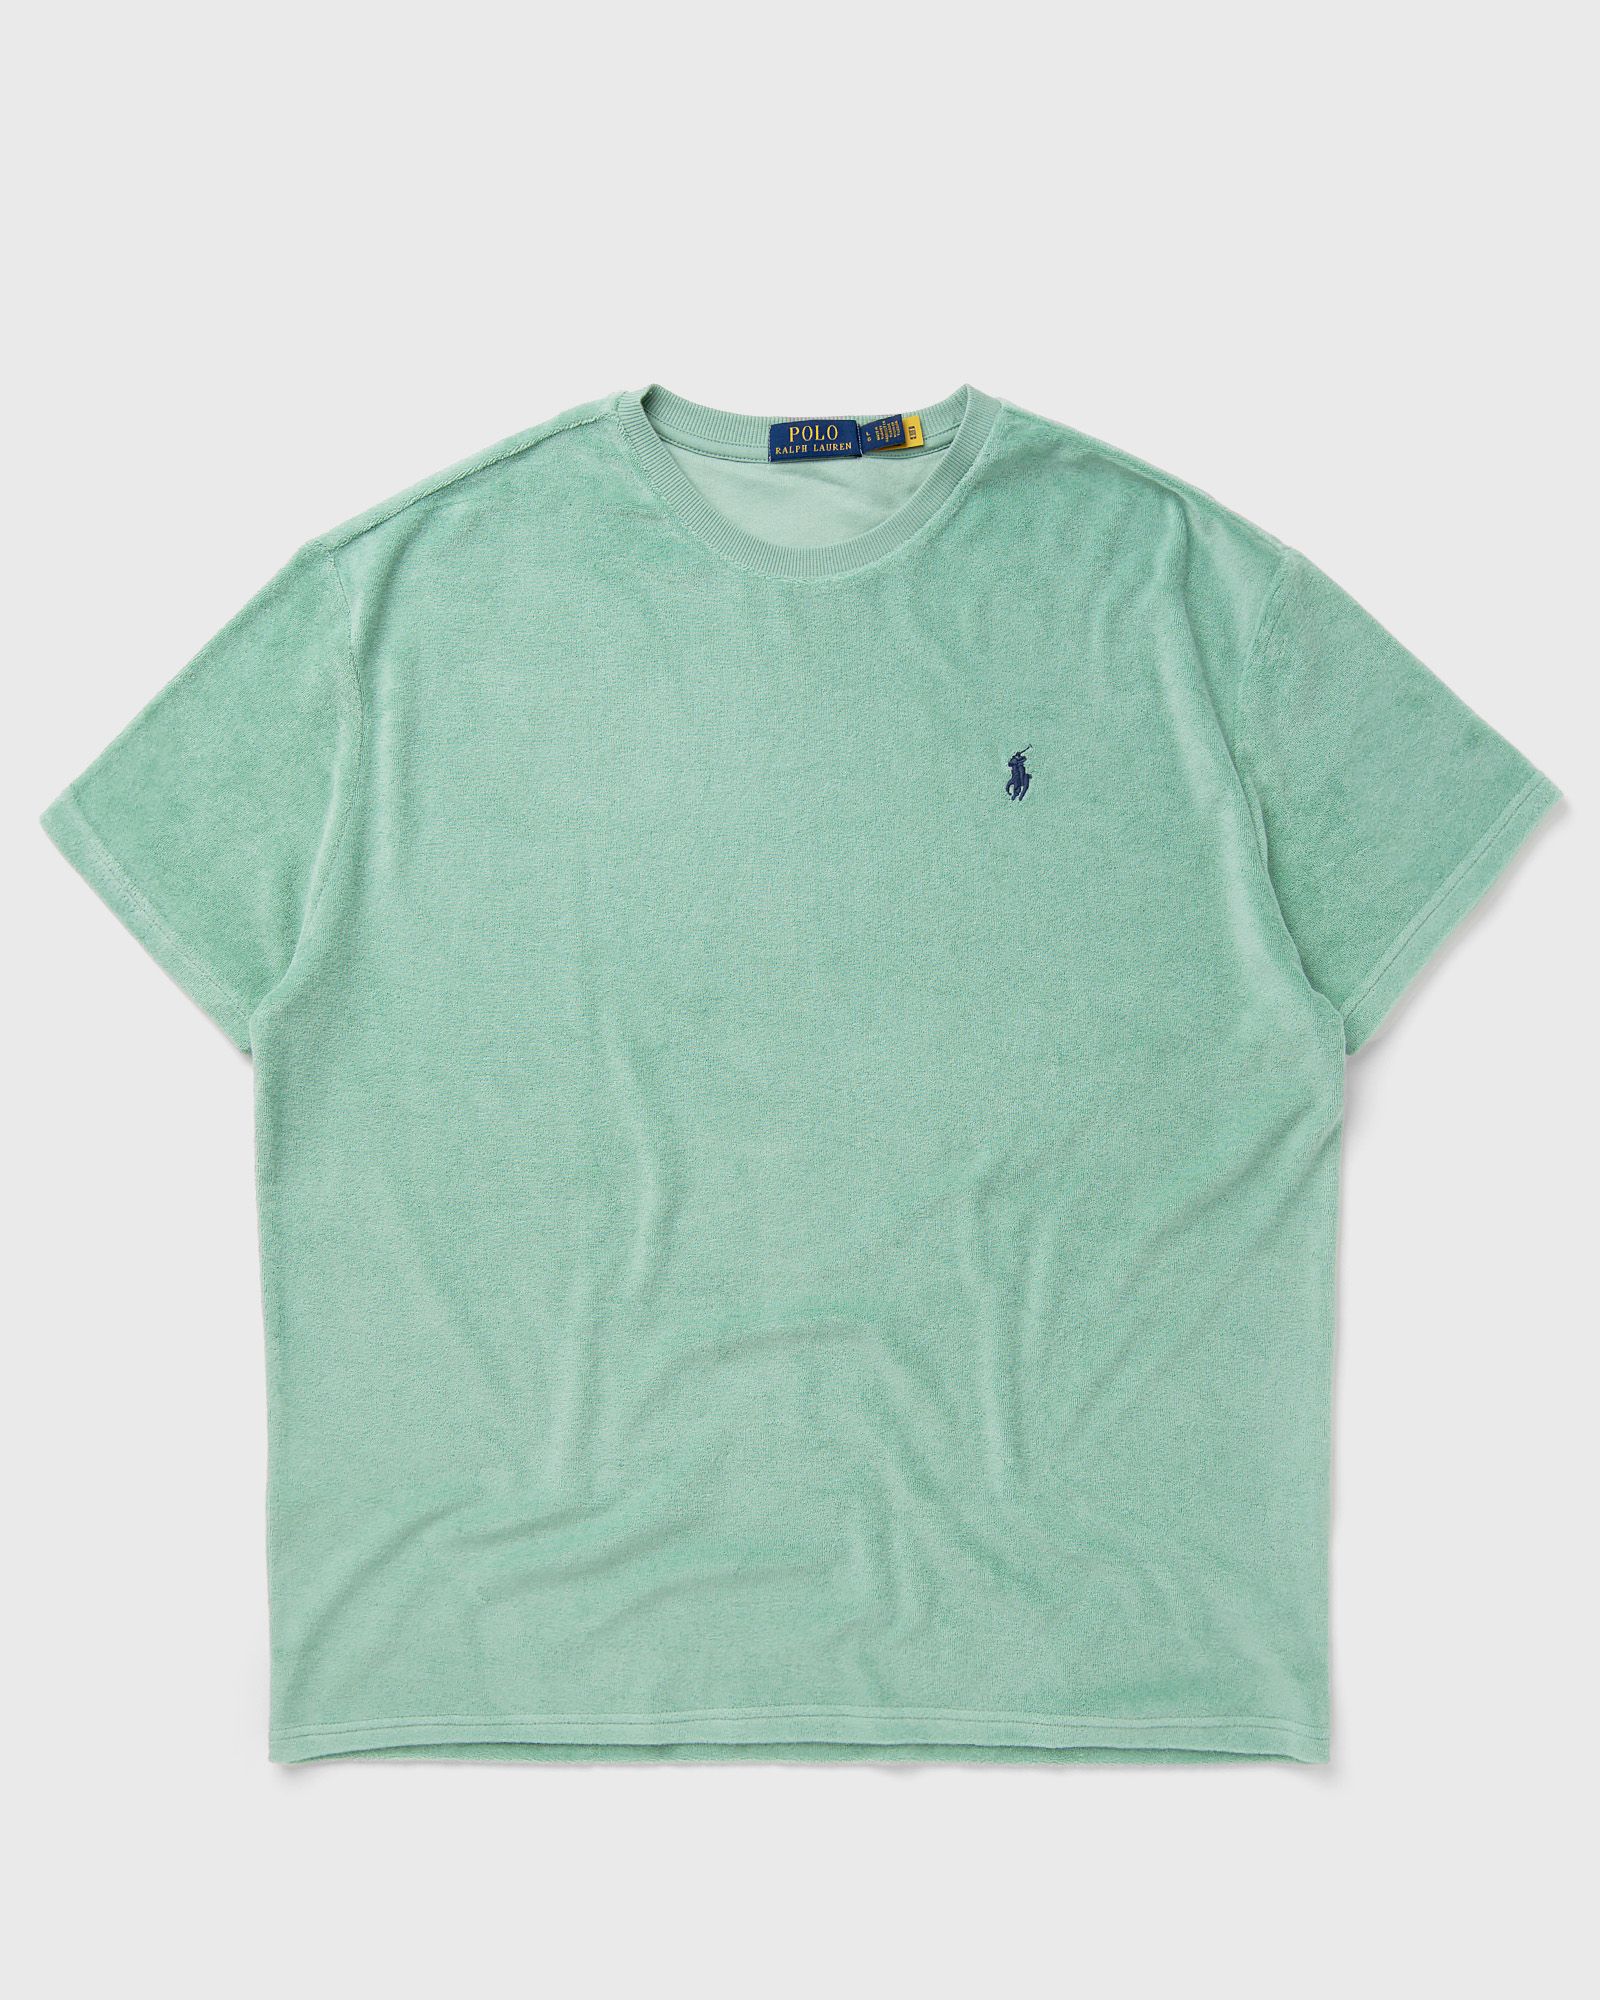 Polo Ralph Lauren - short sleeve-tee men shortsleeves green in größe:xxl